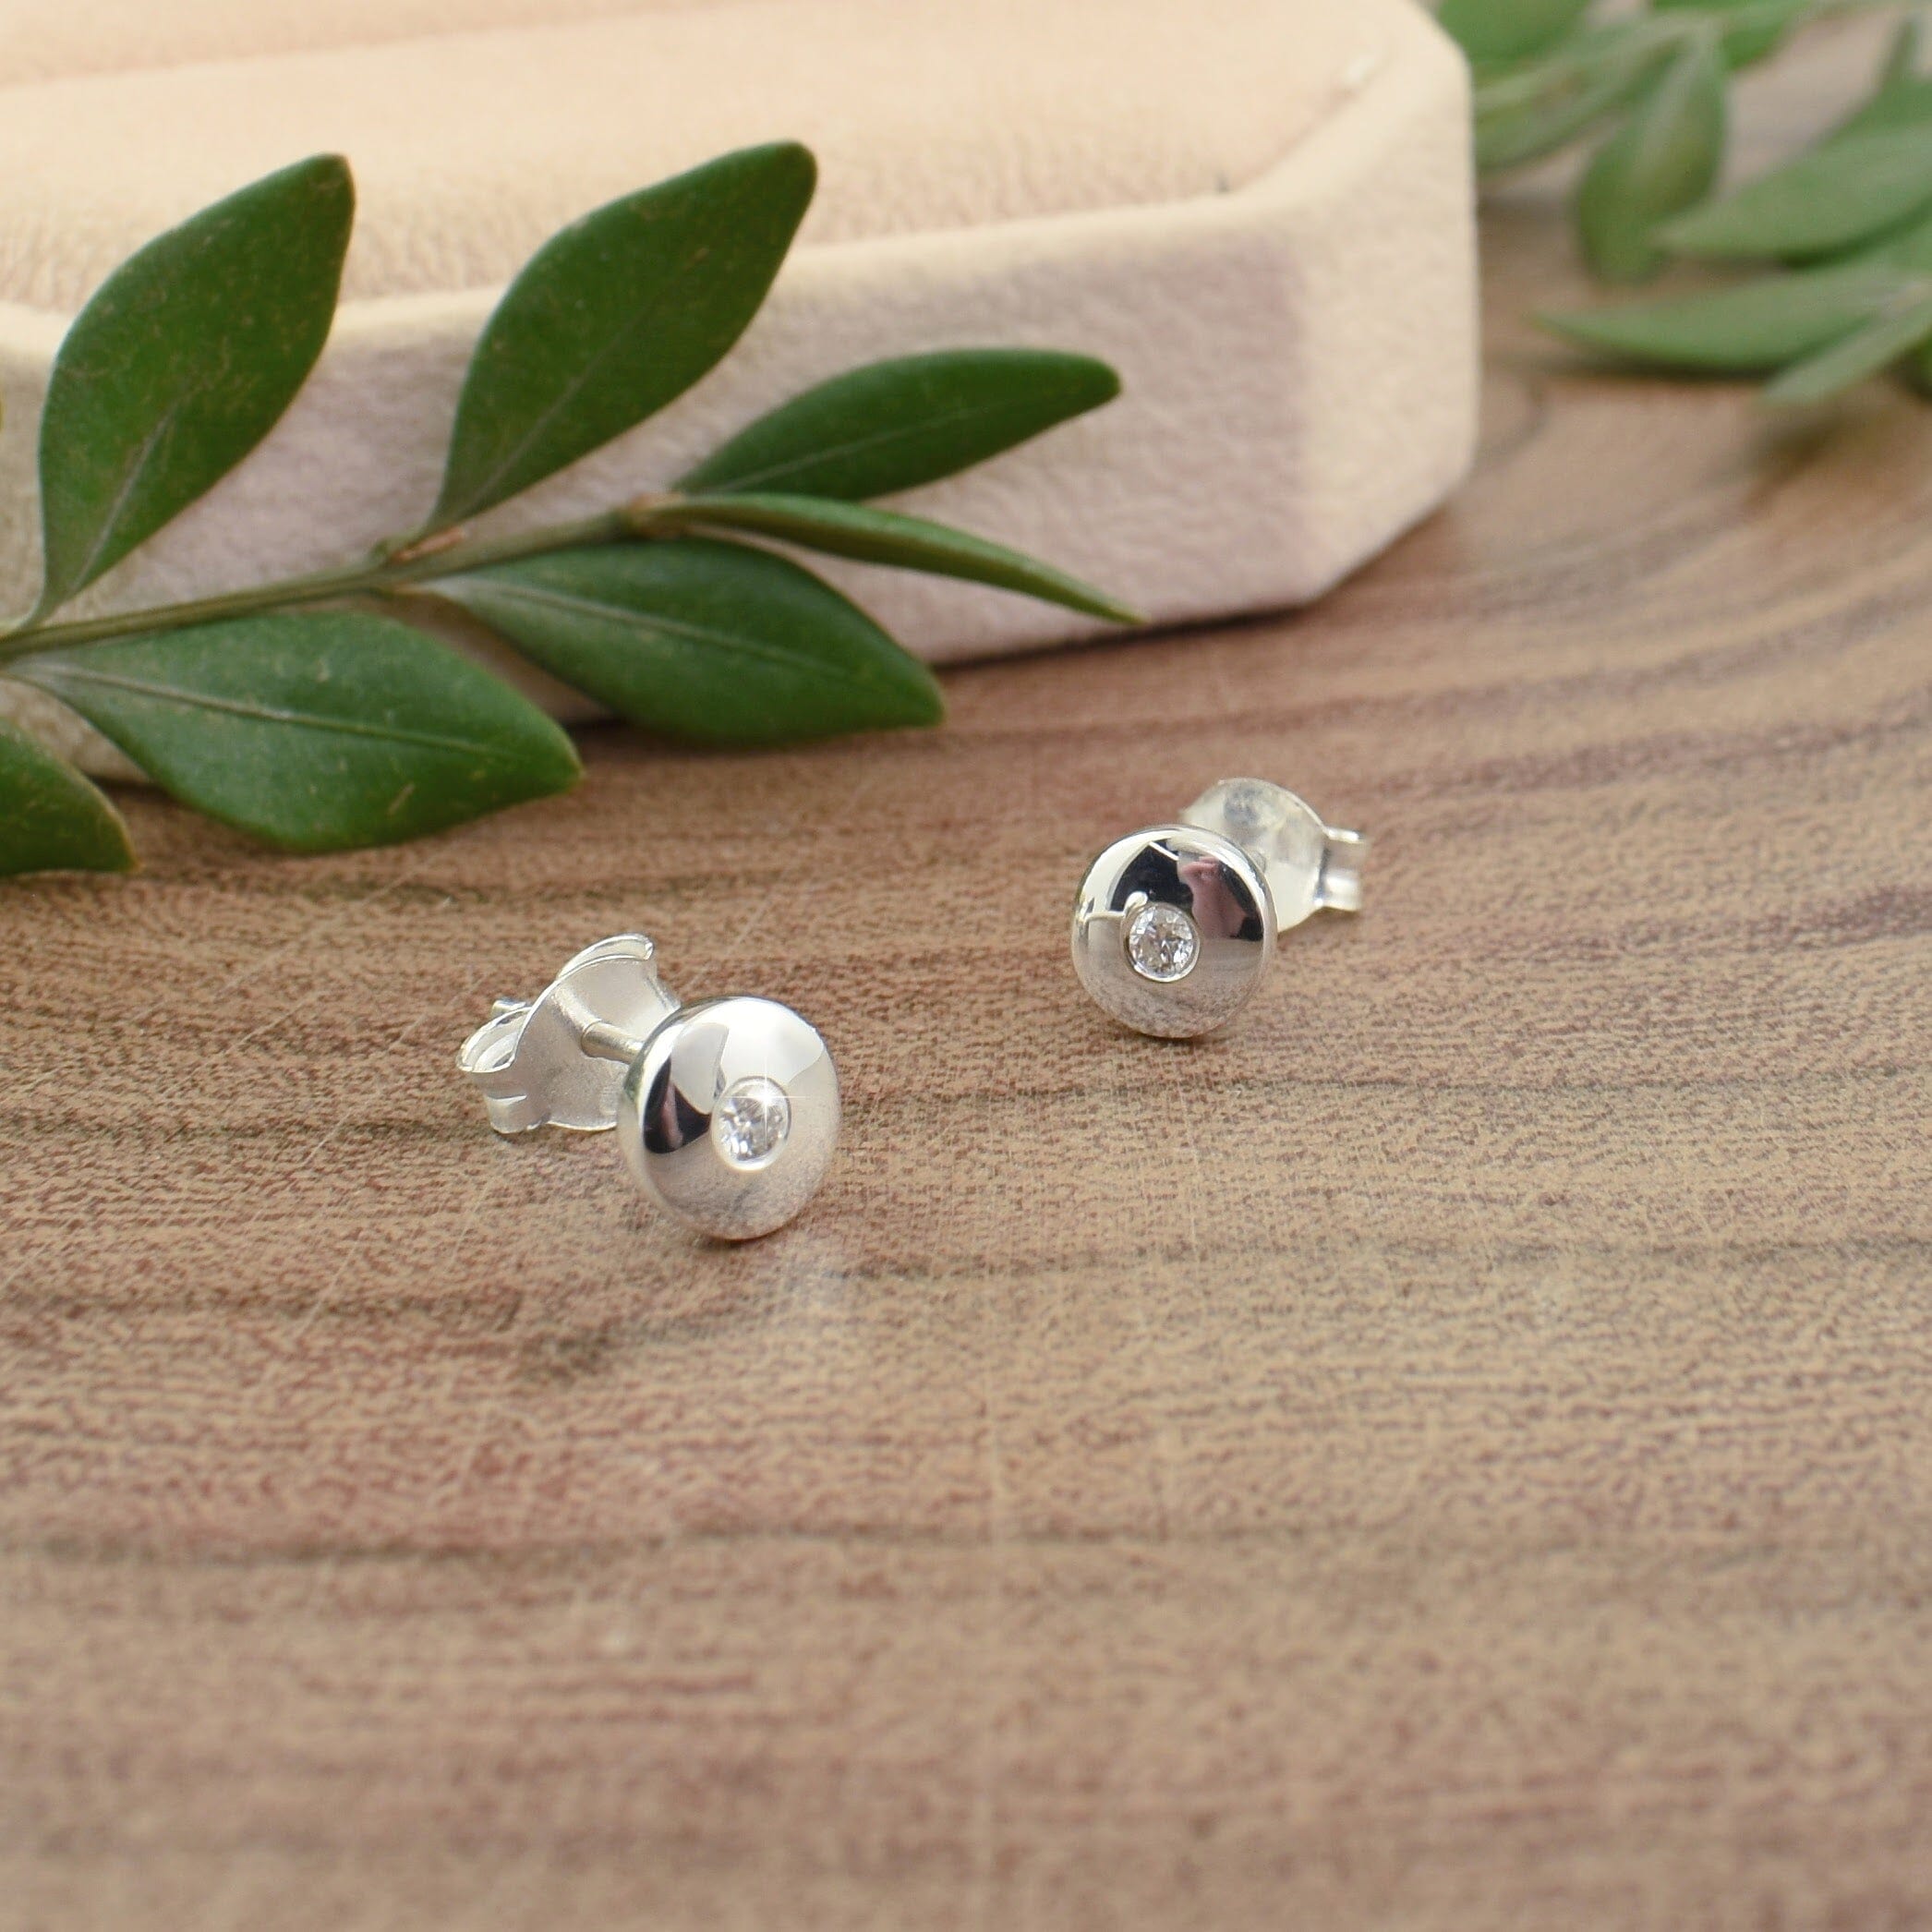 dainty .925 sterling silver post earrings featuring diamonds